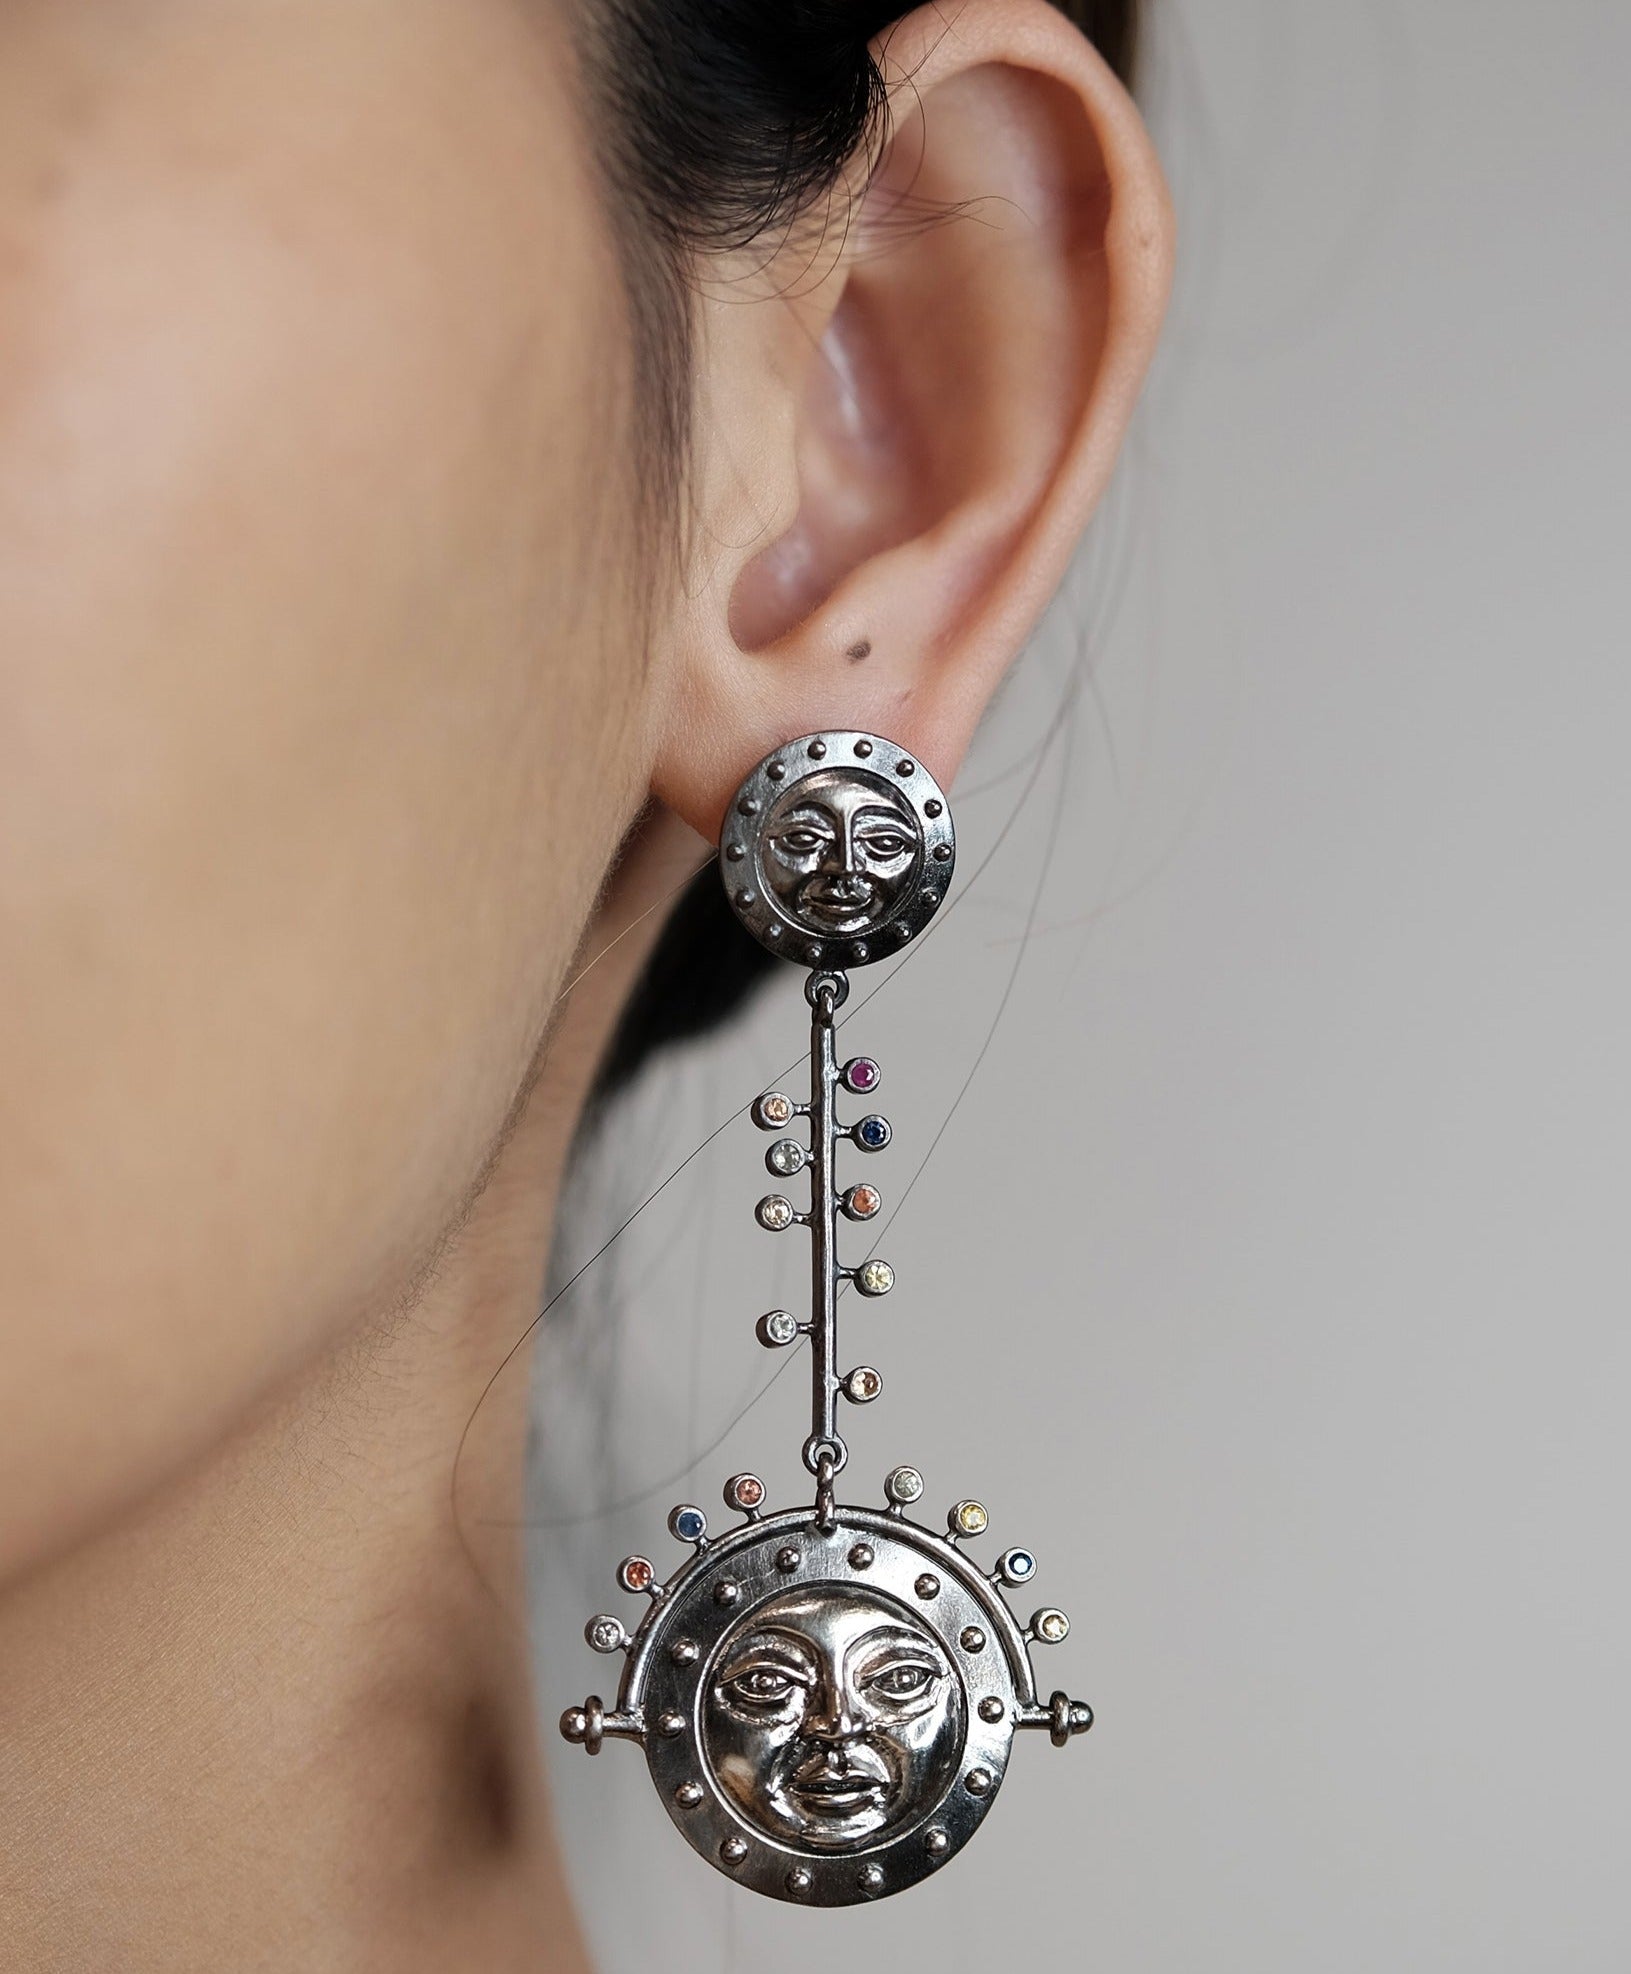 The Madstone moonface earrings